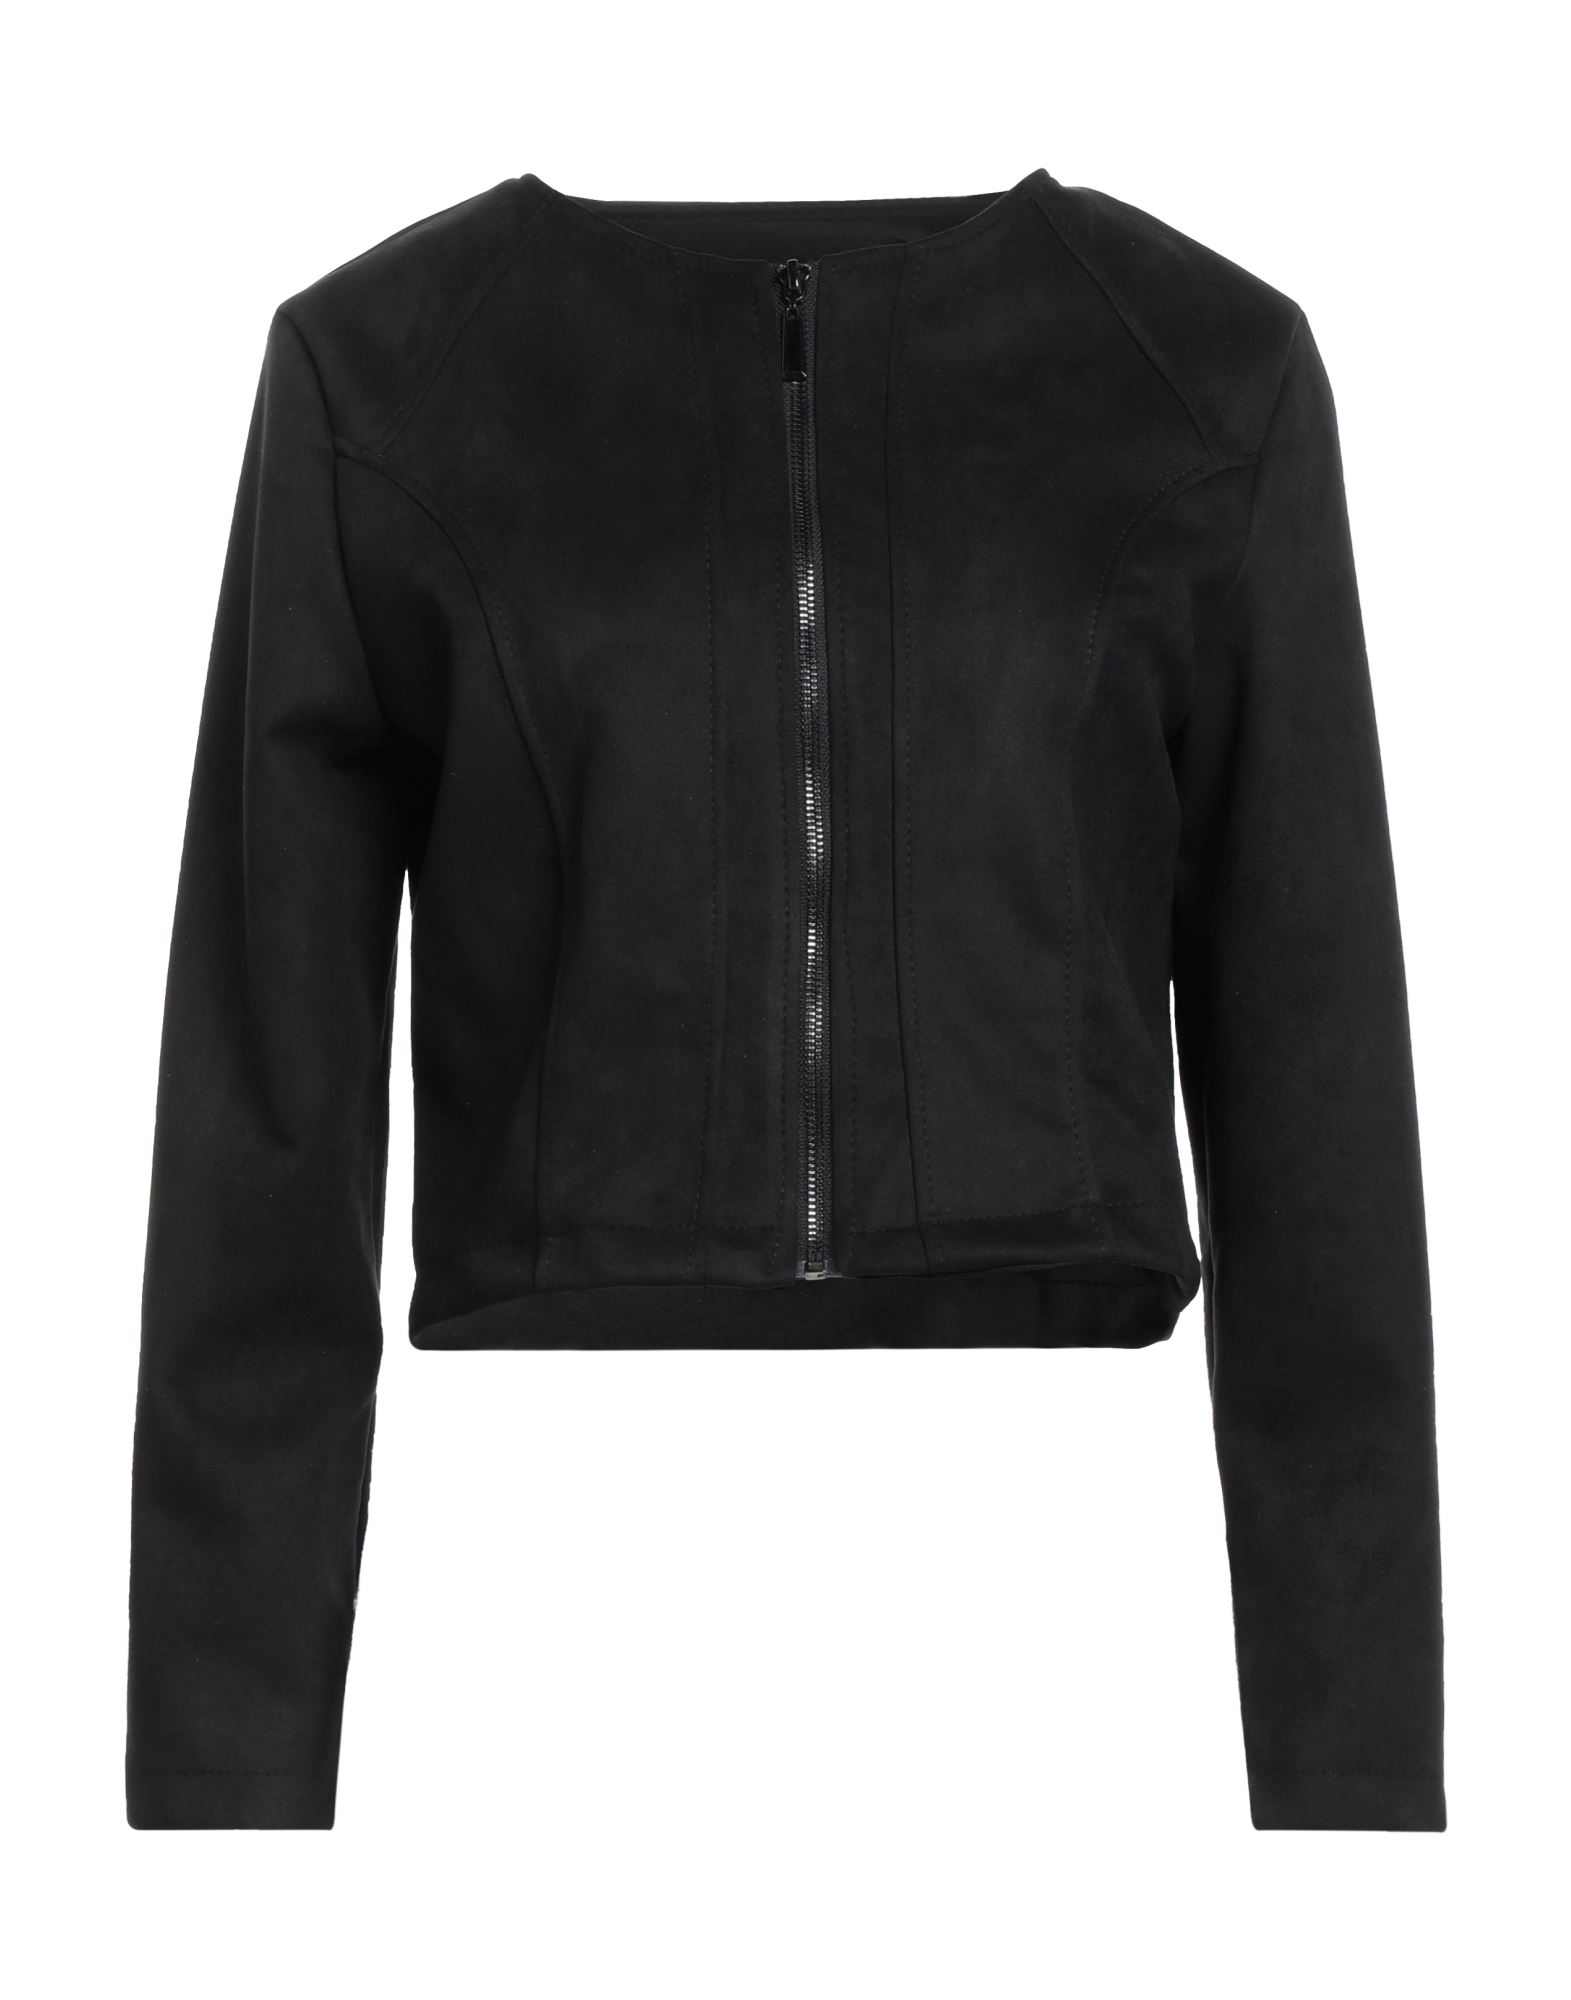 Angela Mele Milano Jackets In Black